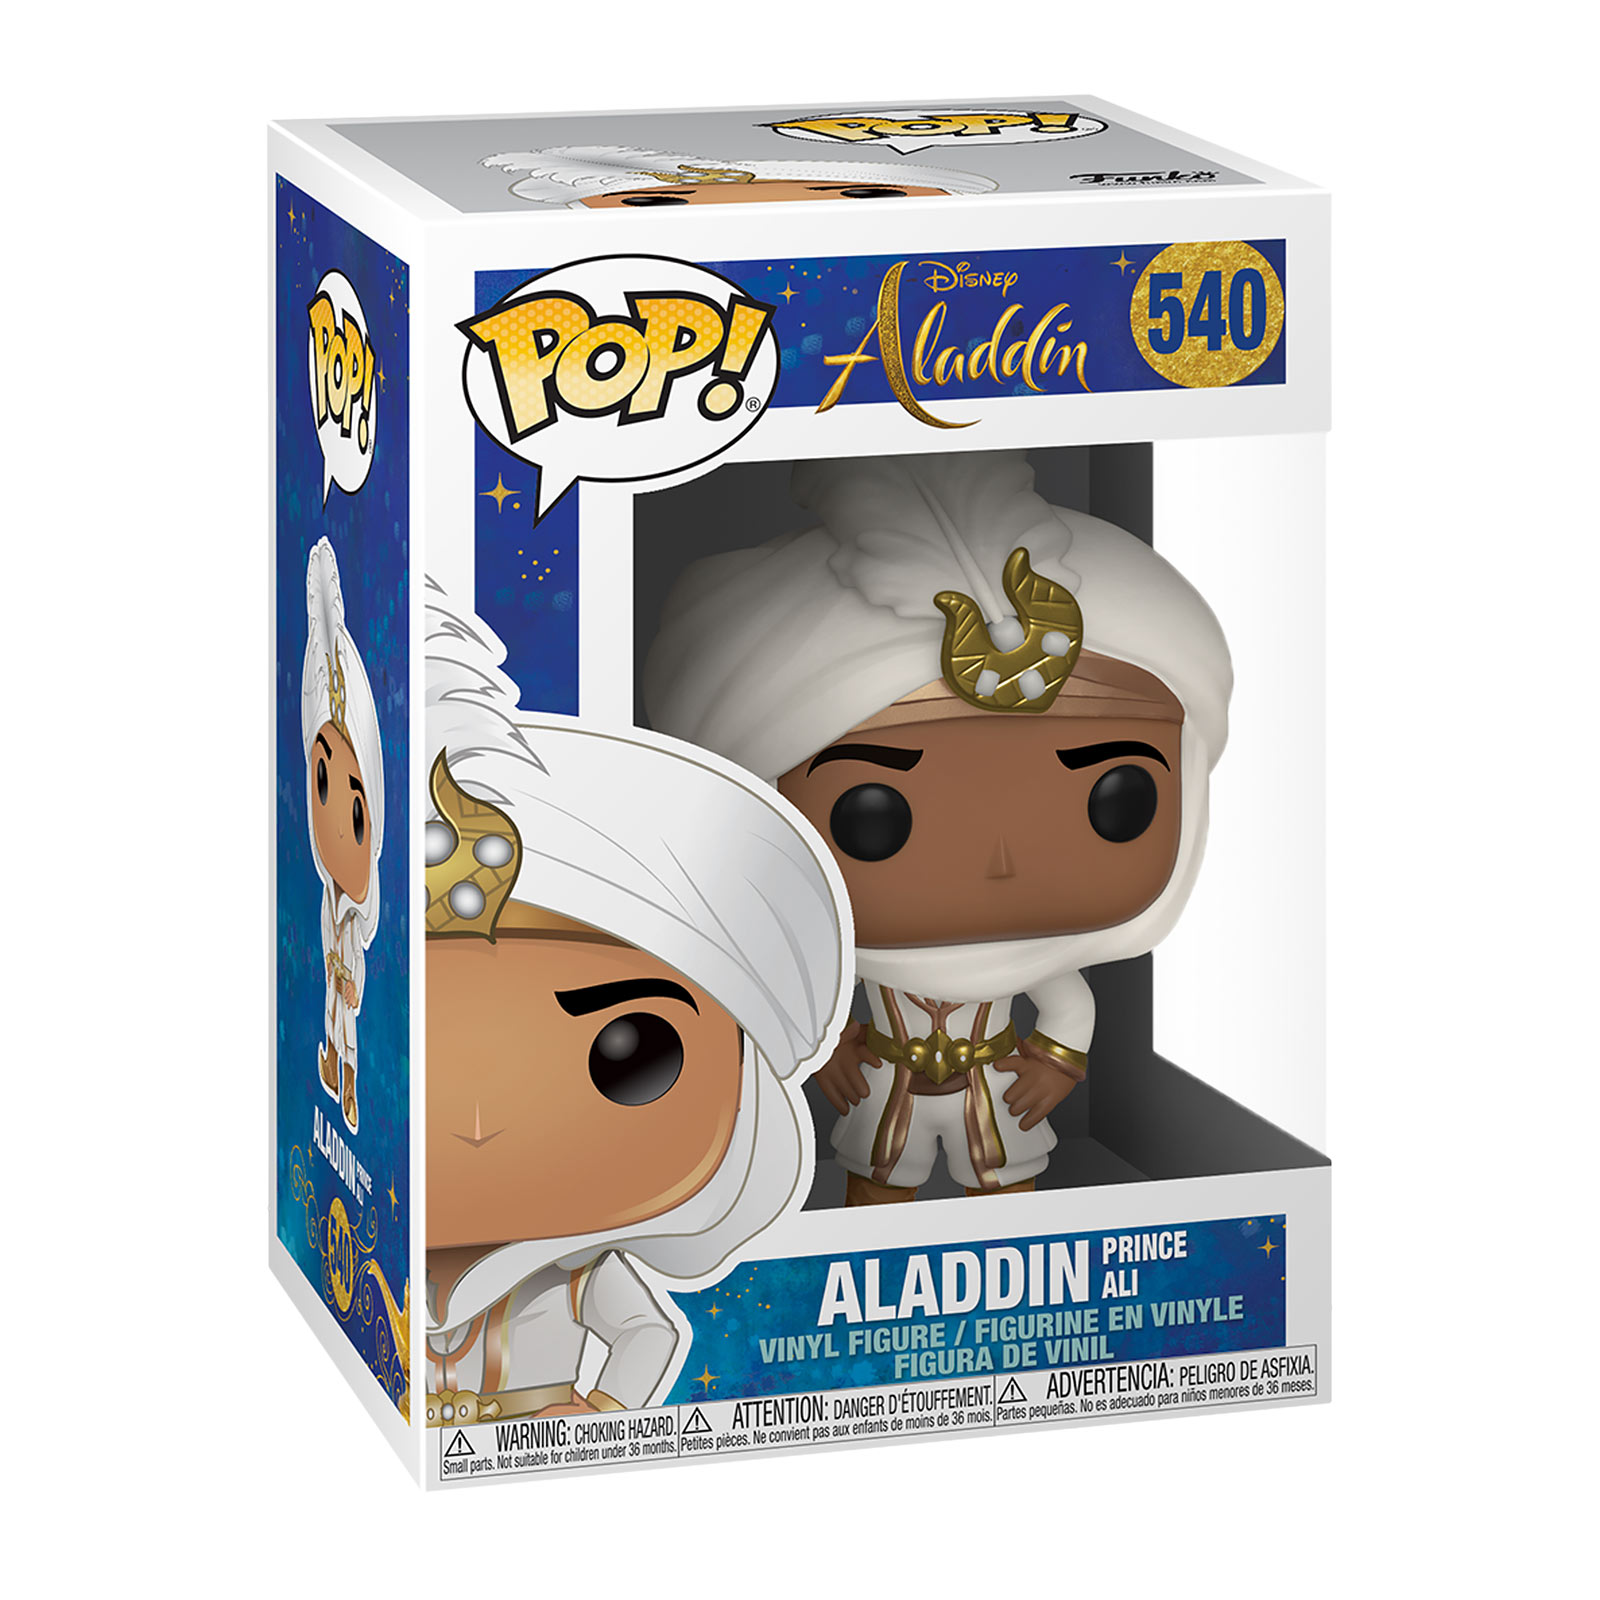 Aladdin Funko Pop figure